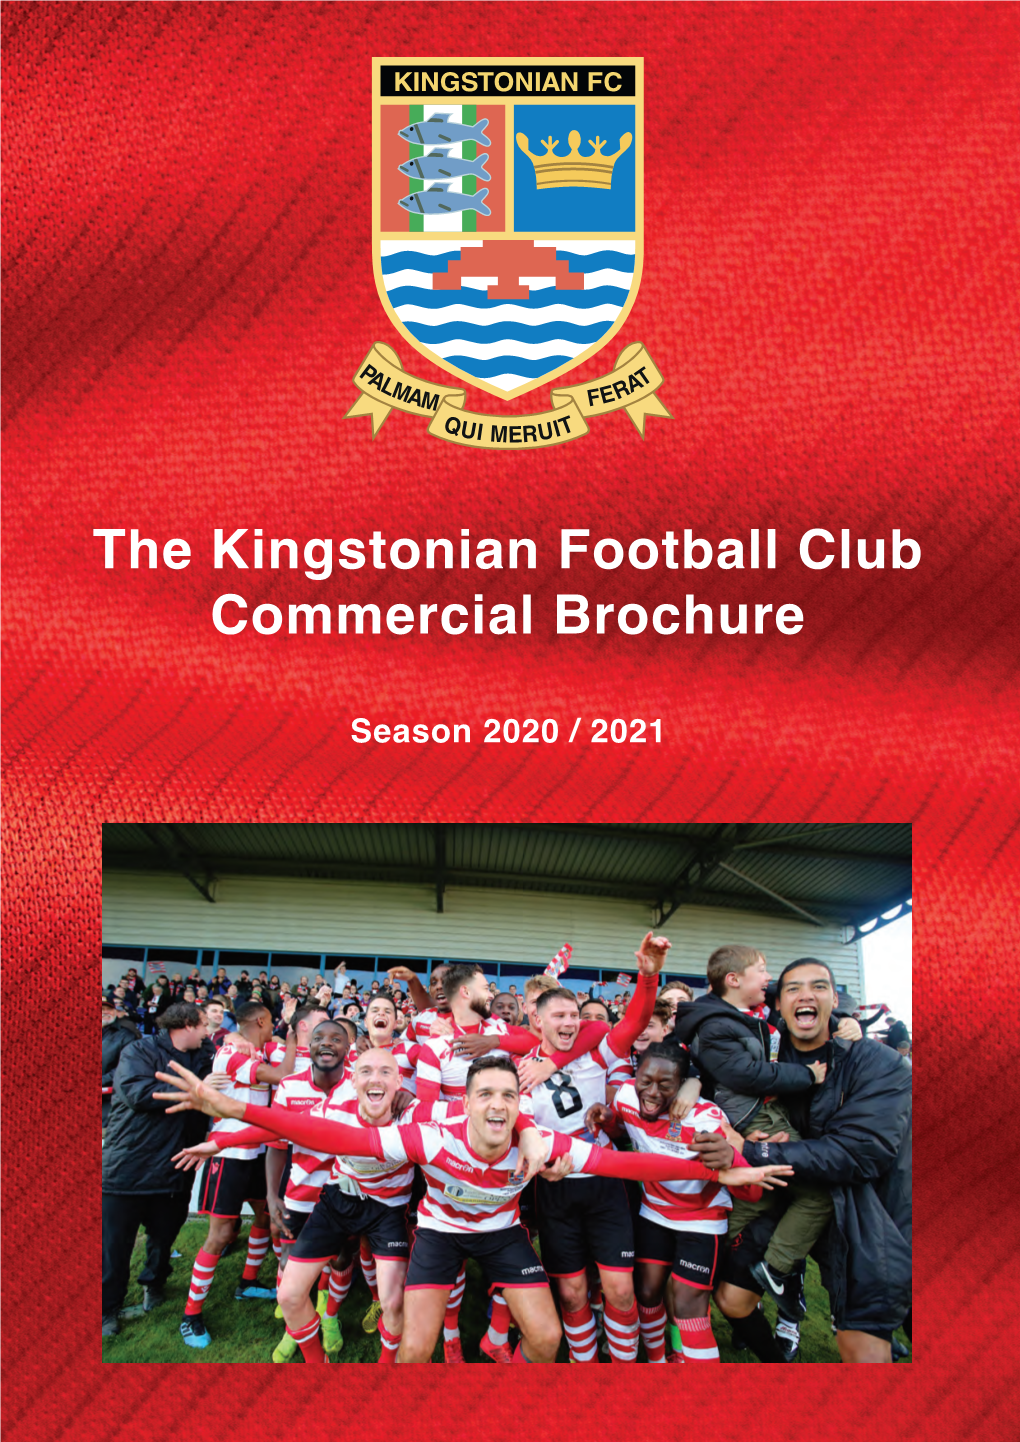 The Kingstonian Football Club Commercial Brochure